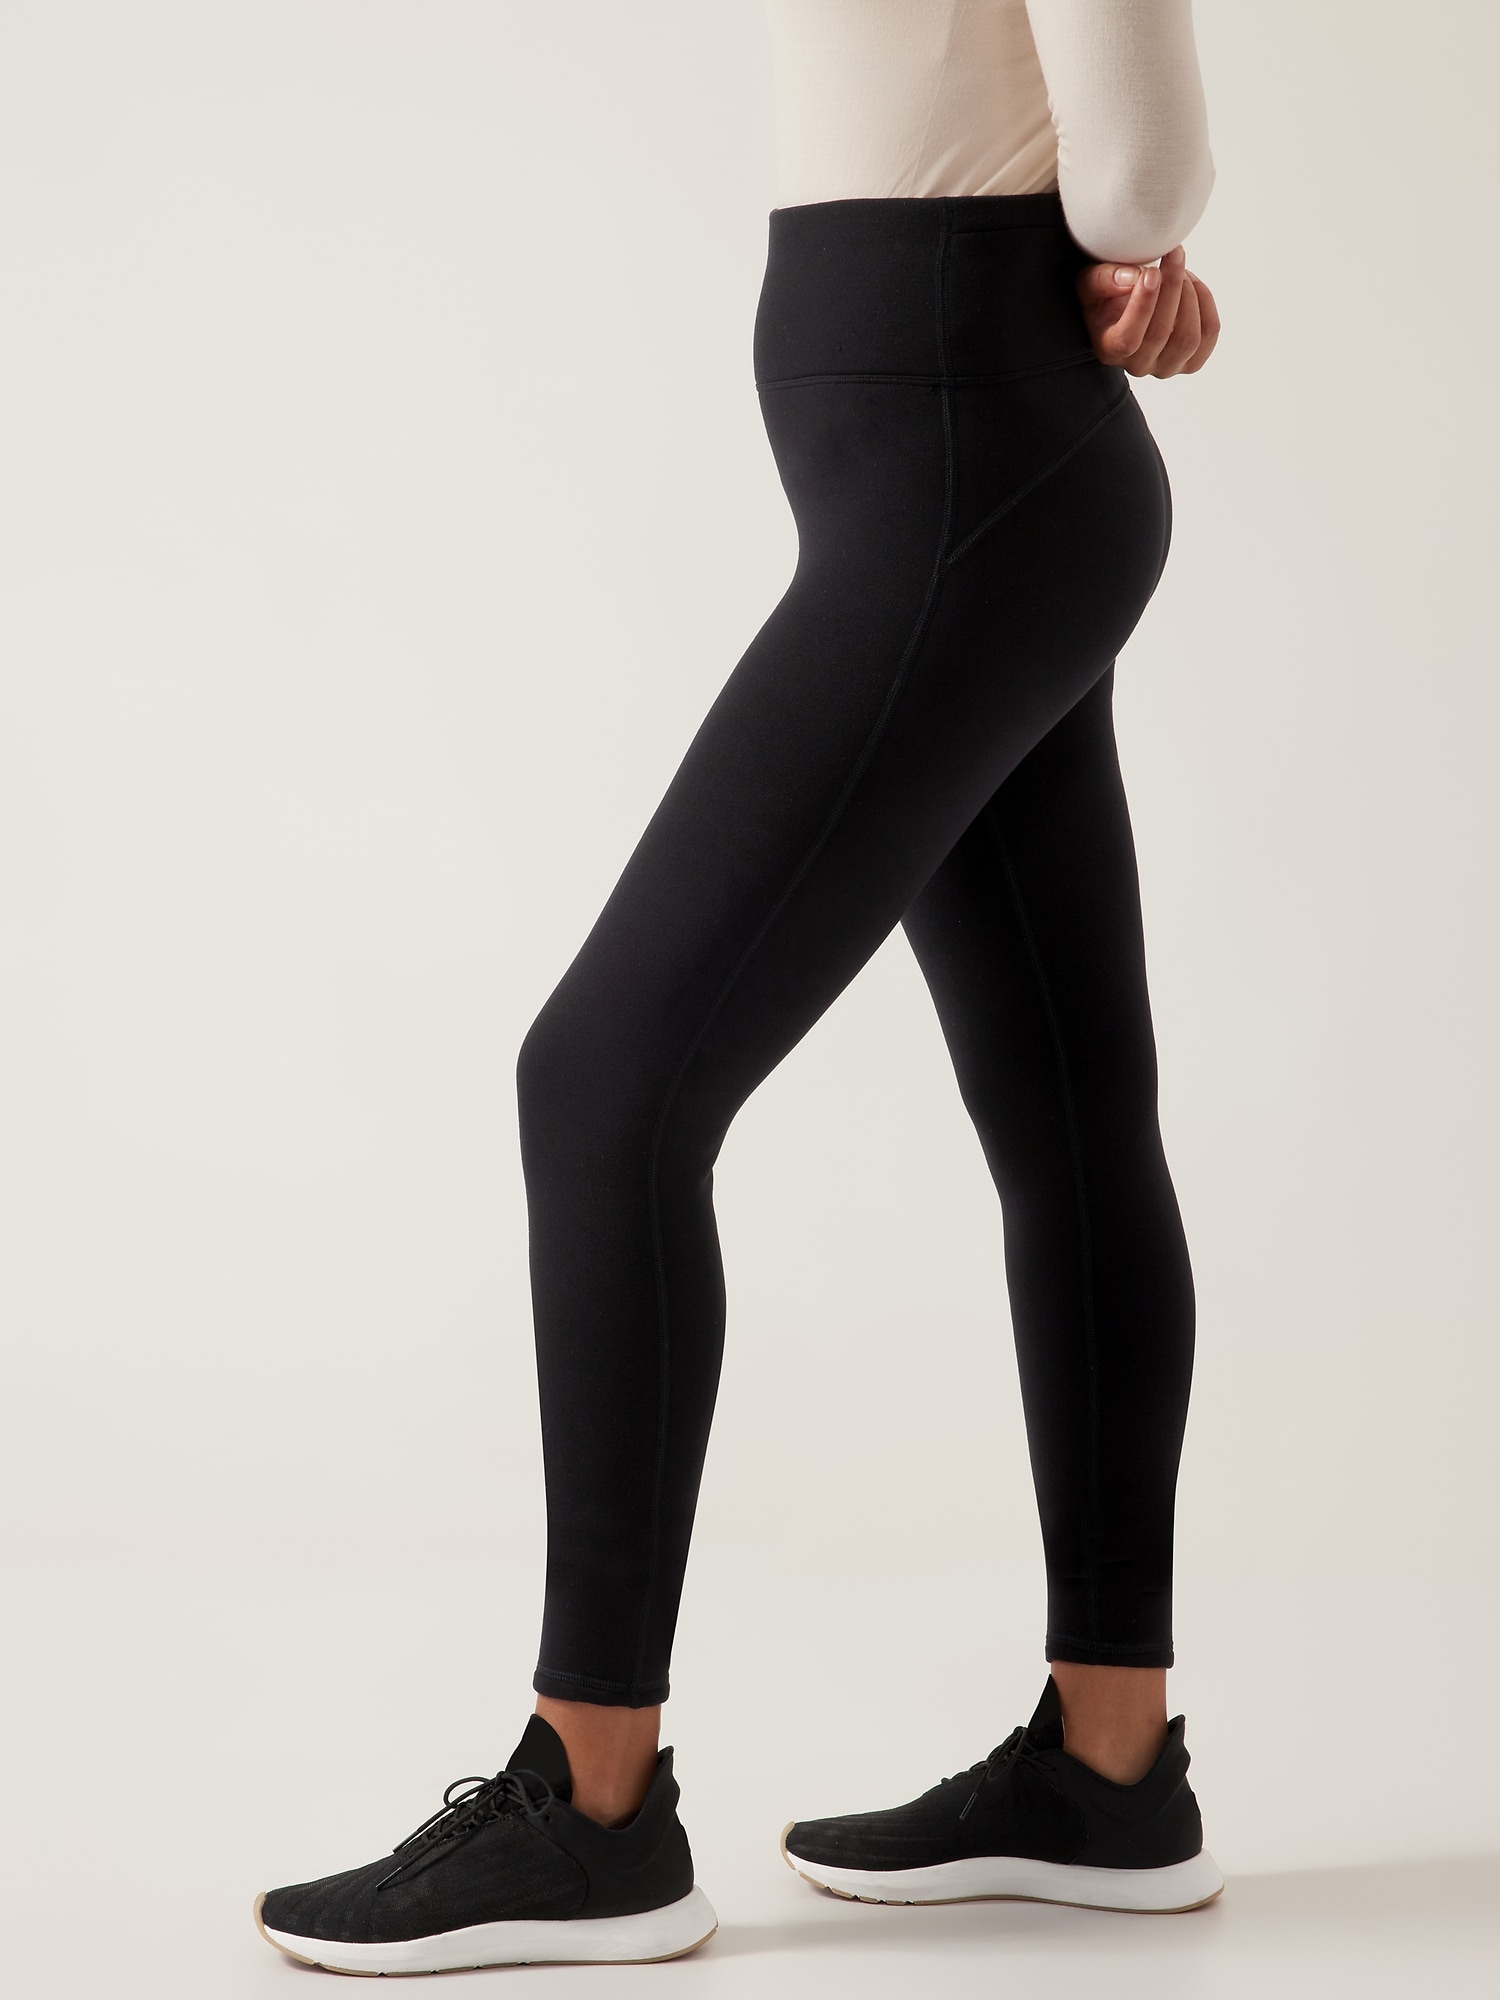 Athleta Woman's Sz XXS Gray & Black Fleece-Lined Leggings Zip